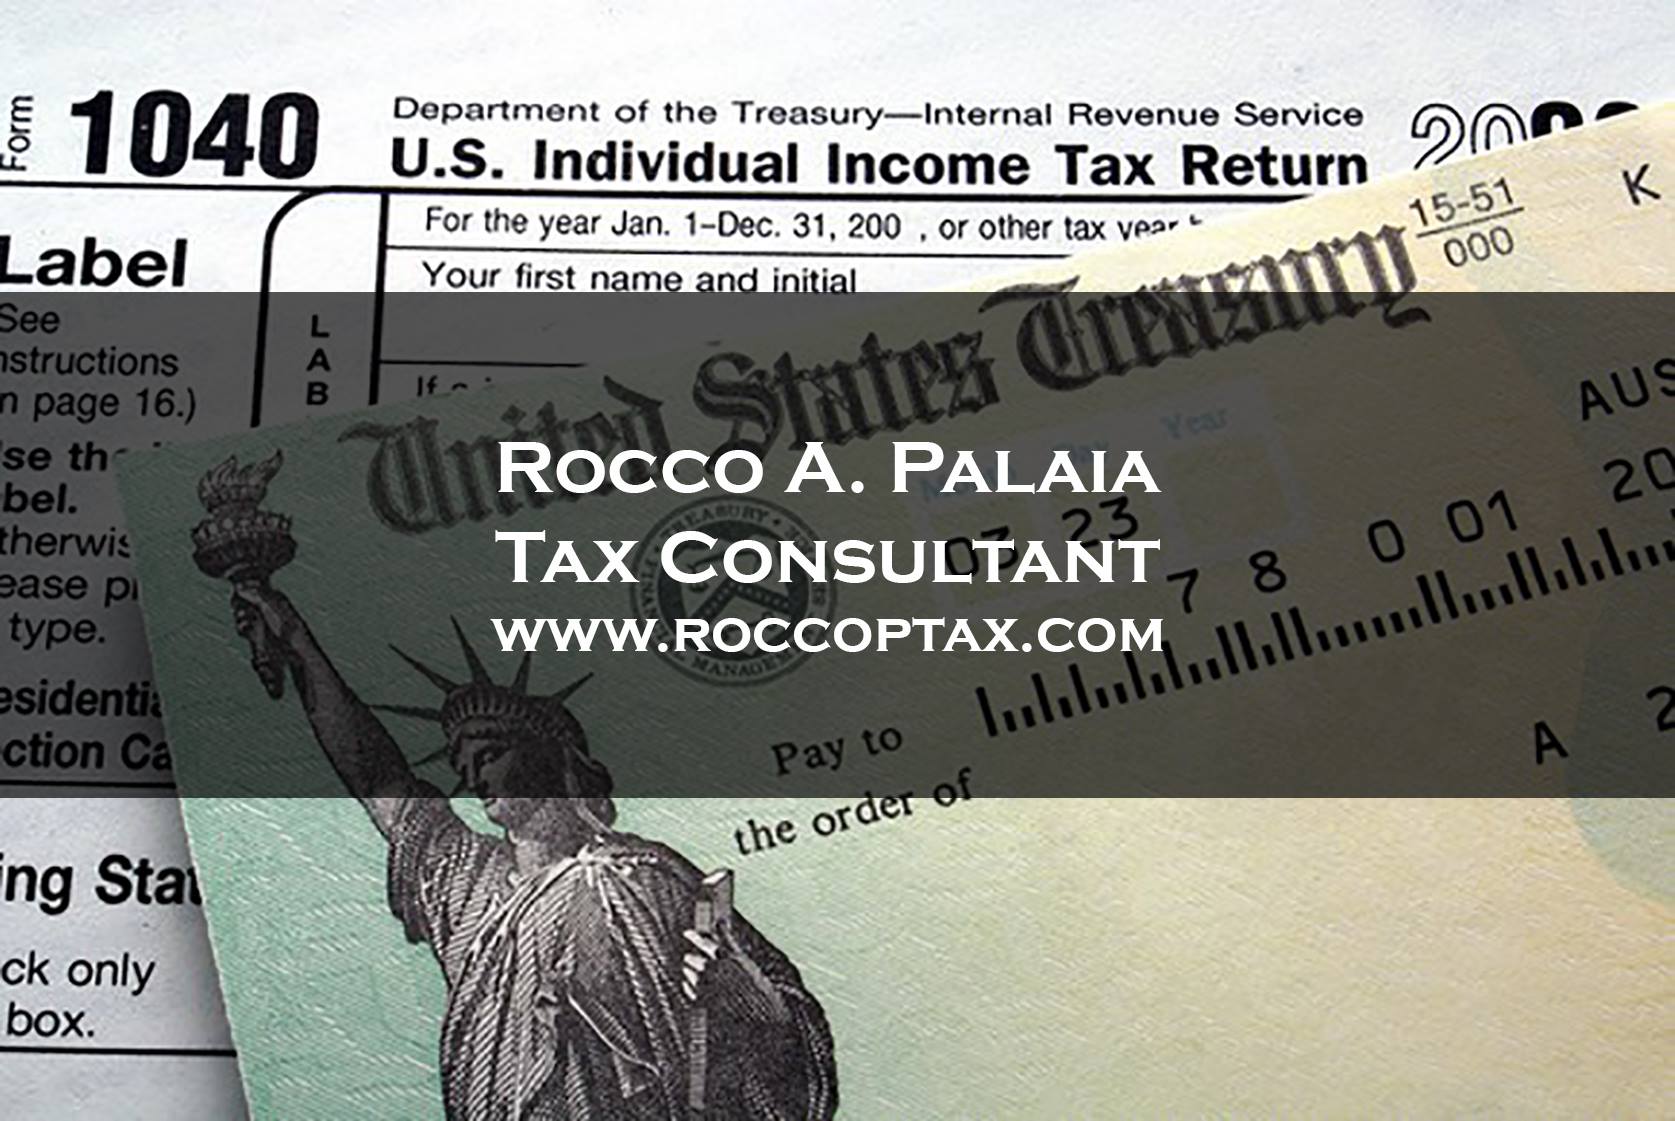 Rocco A. Palaia Tax Consultant